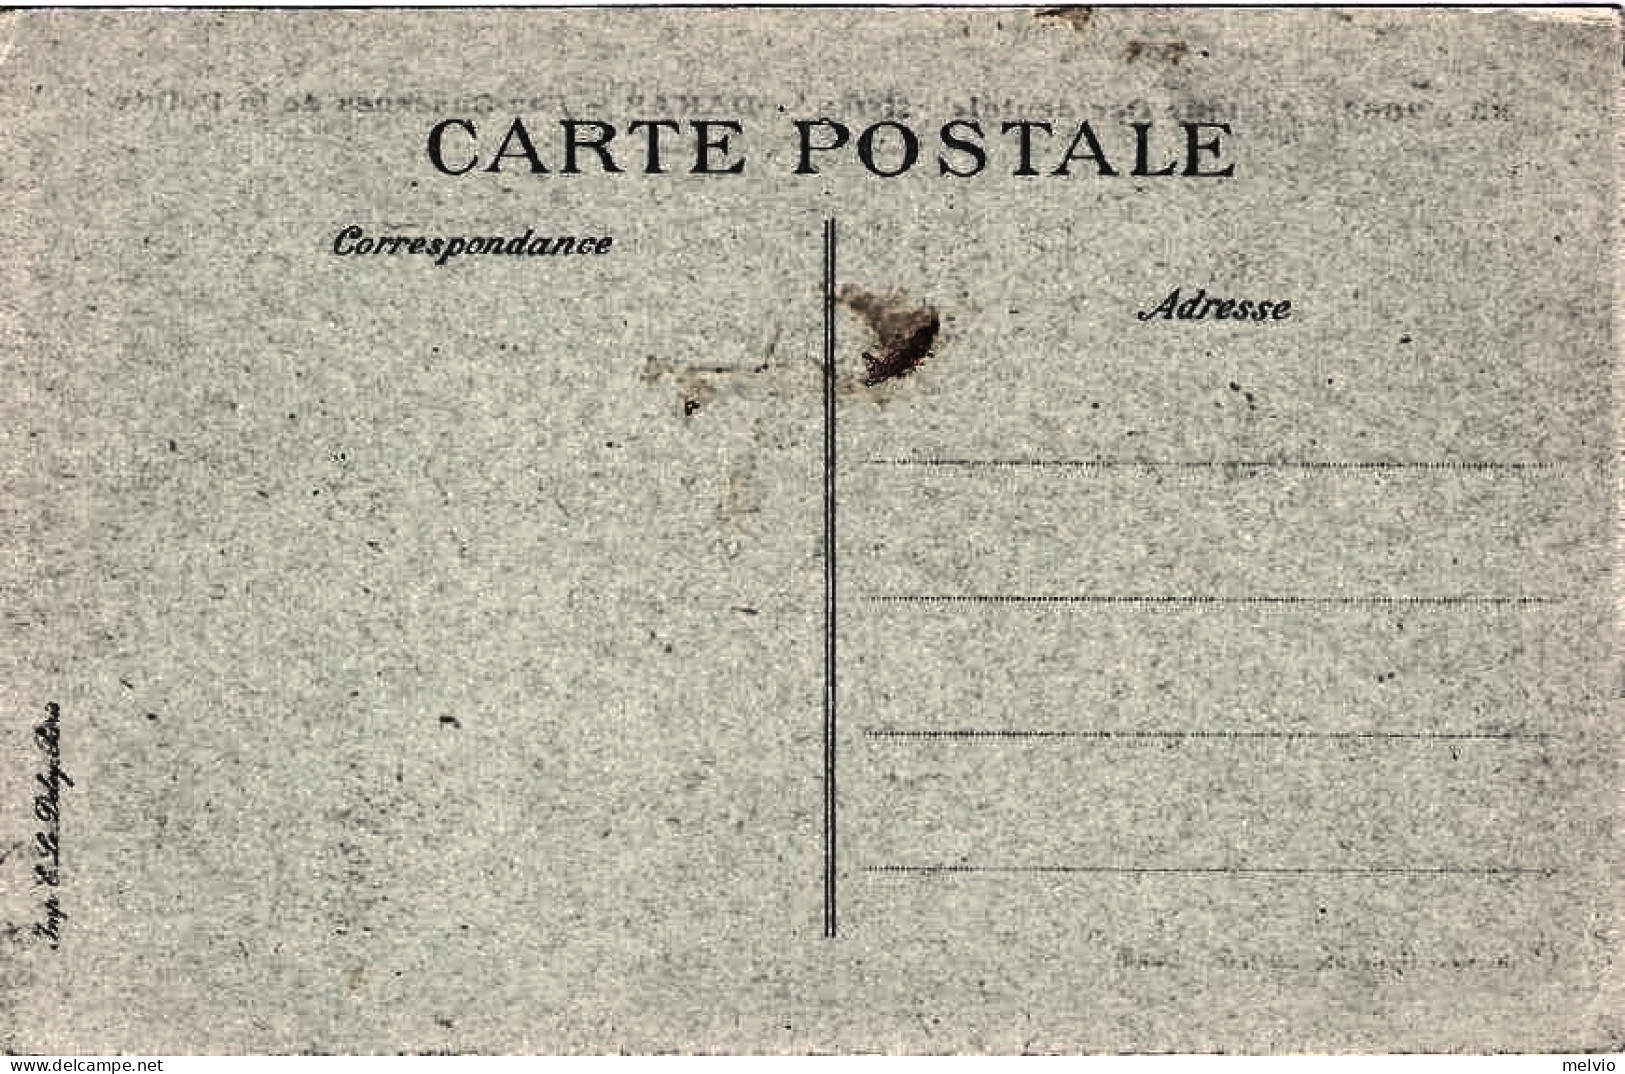 1920circa-Senegal Cartolina "Dakar Les Casernes De La Pointe Au Loin Goree" - Sénégal